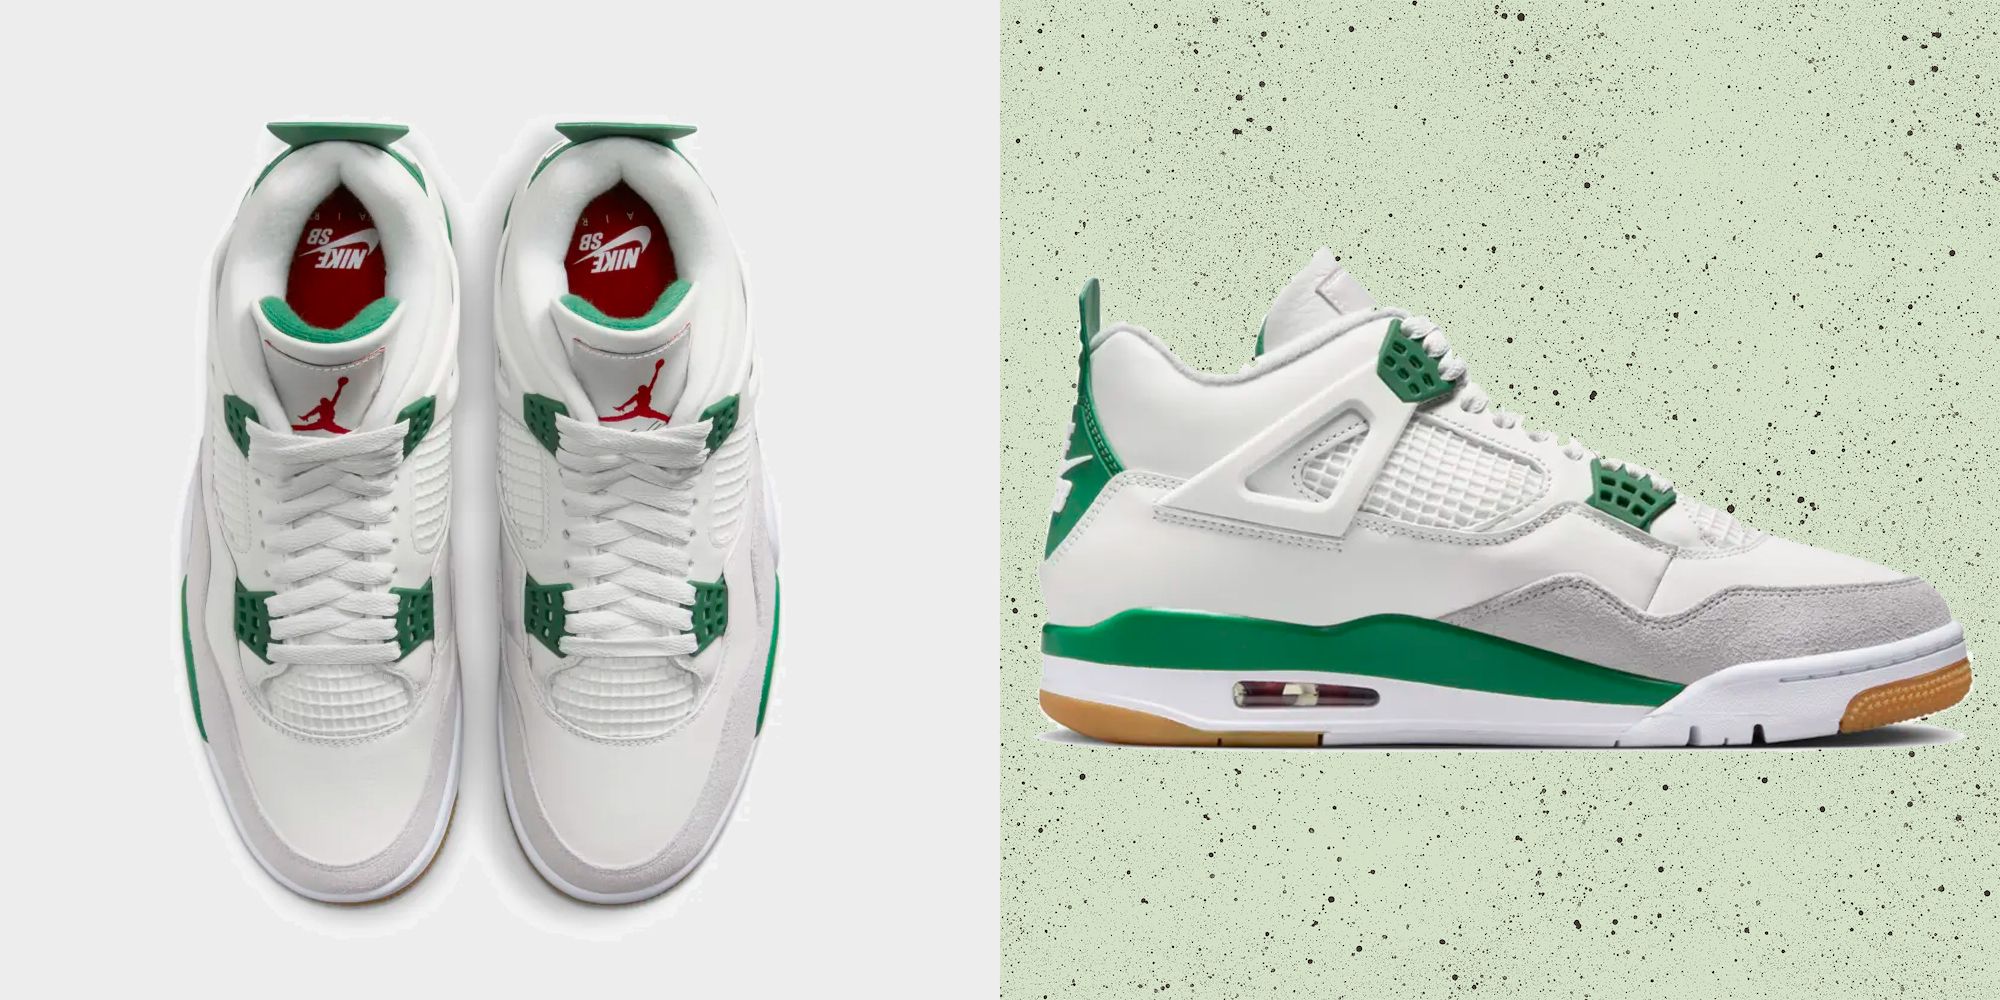 How to Buy the Nike SB x Air Jordan 4 'Pine Green' Sneaker